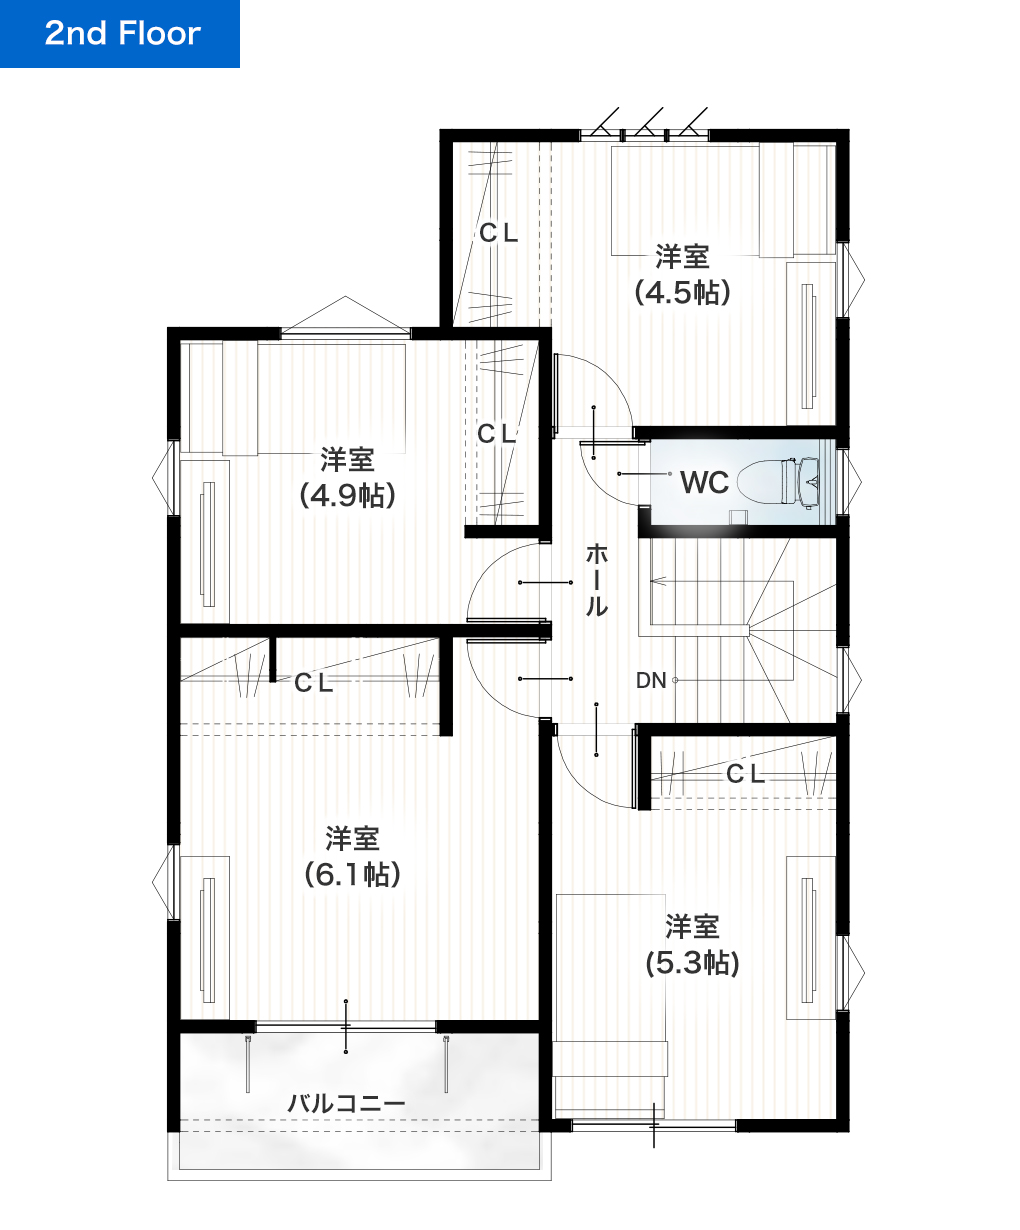 熊本市北区武蔵ヶ丘1丁目A 29坪 4LDK 建売・一戸建ての新築物件 2階間取り図